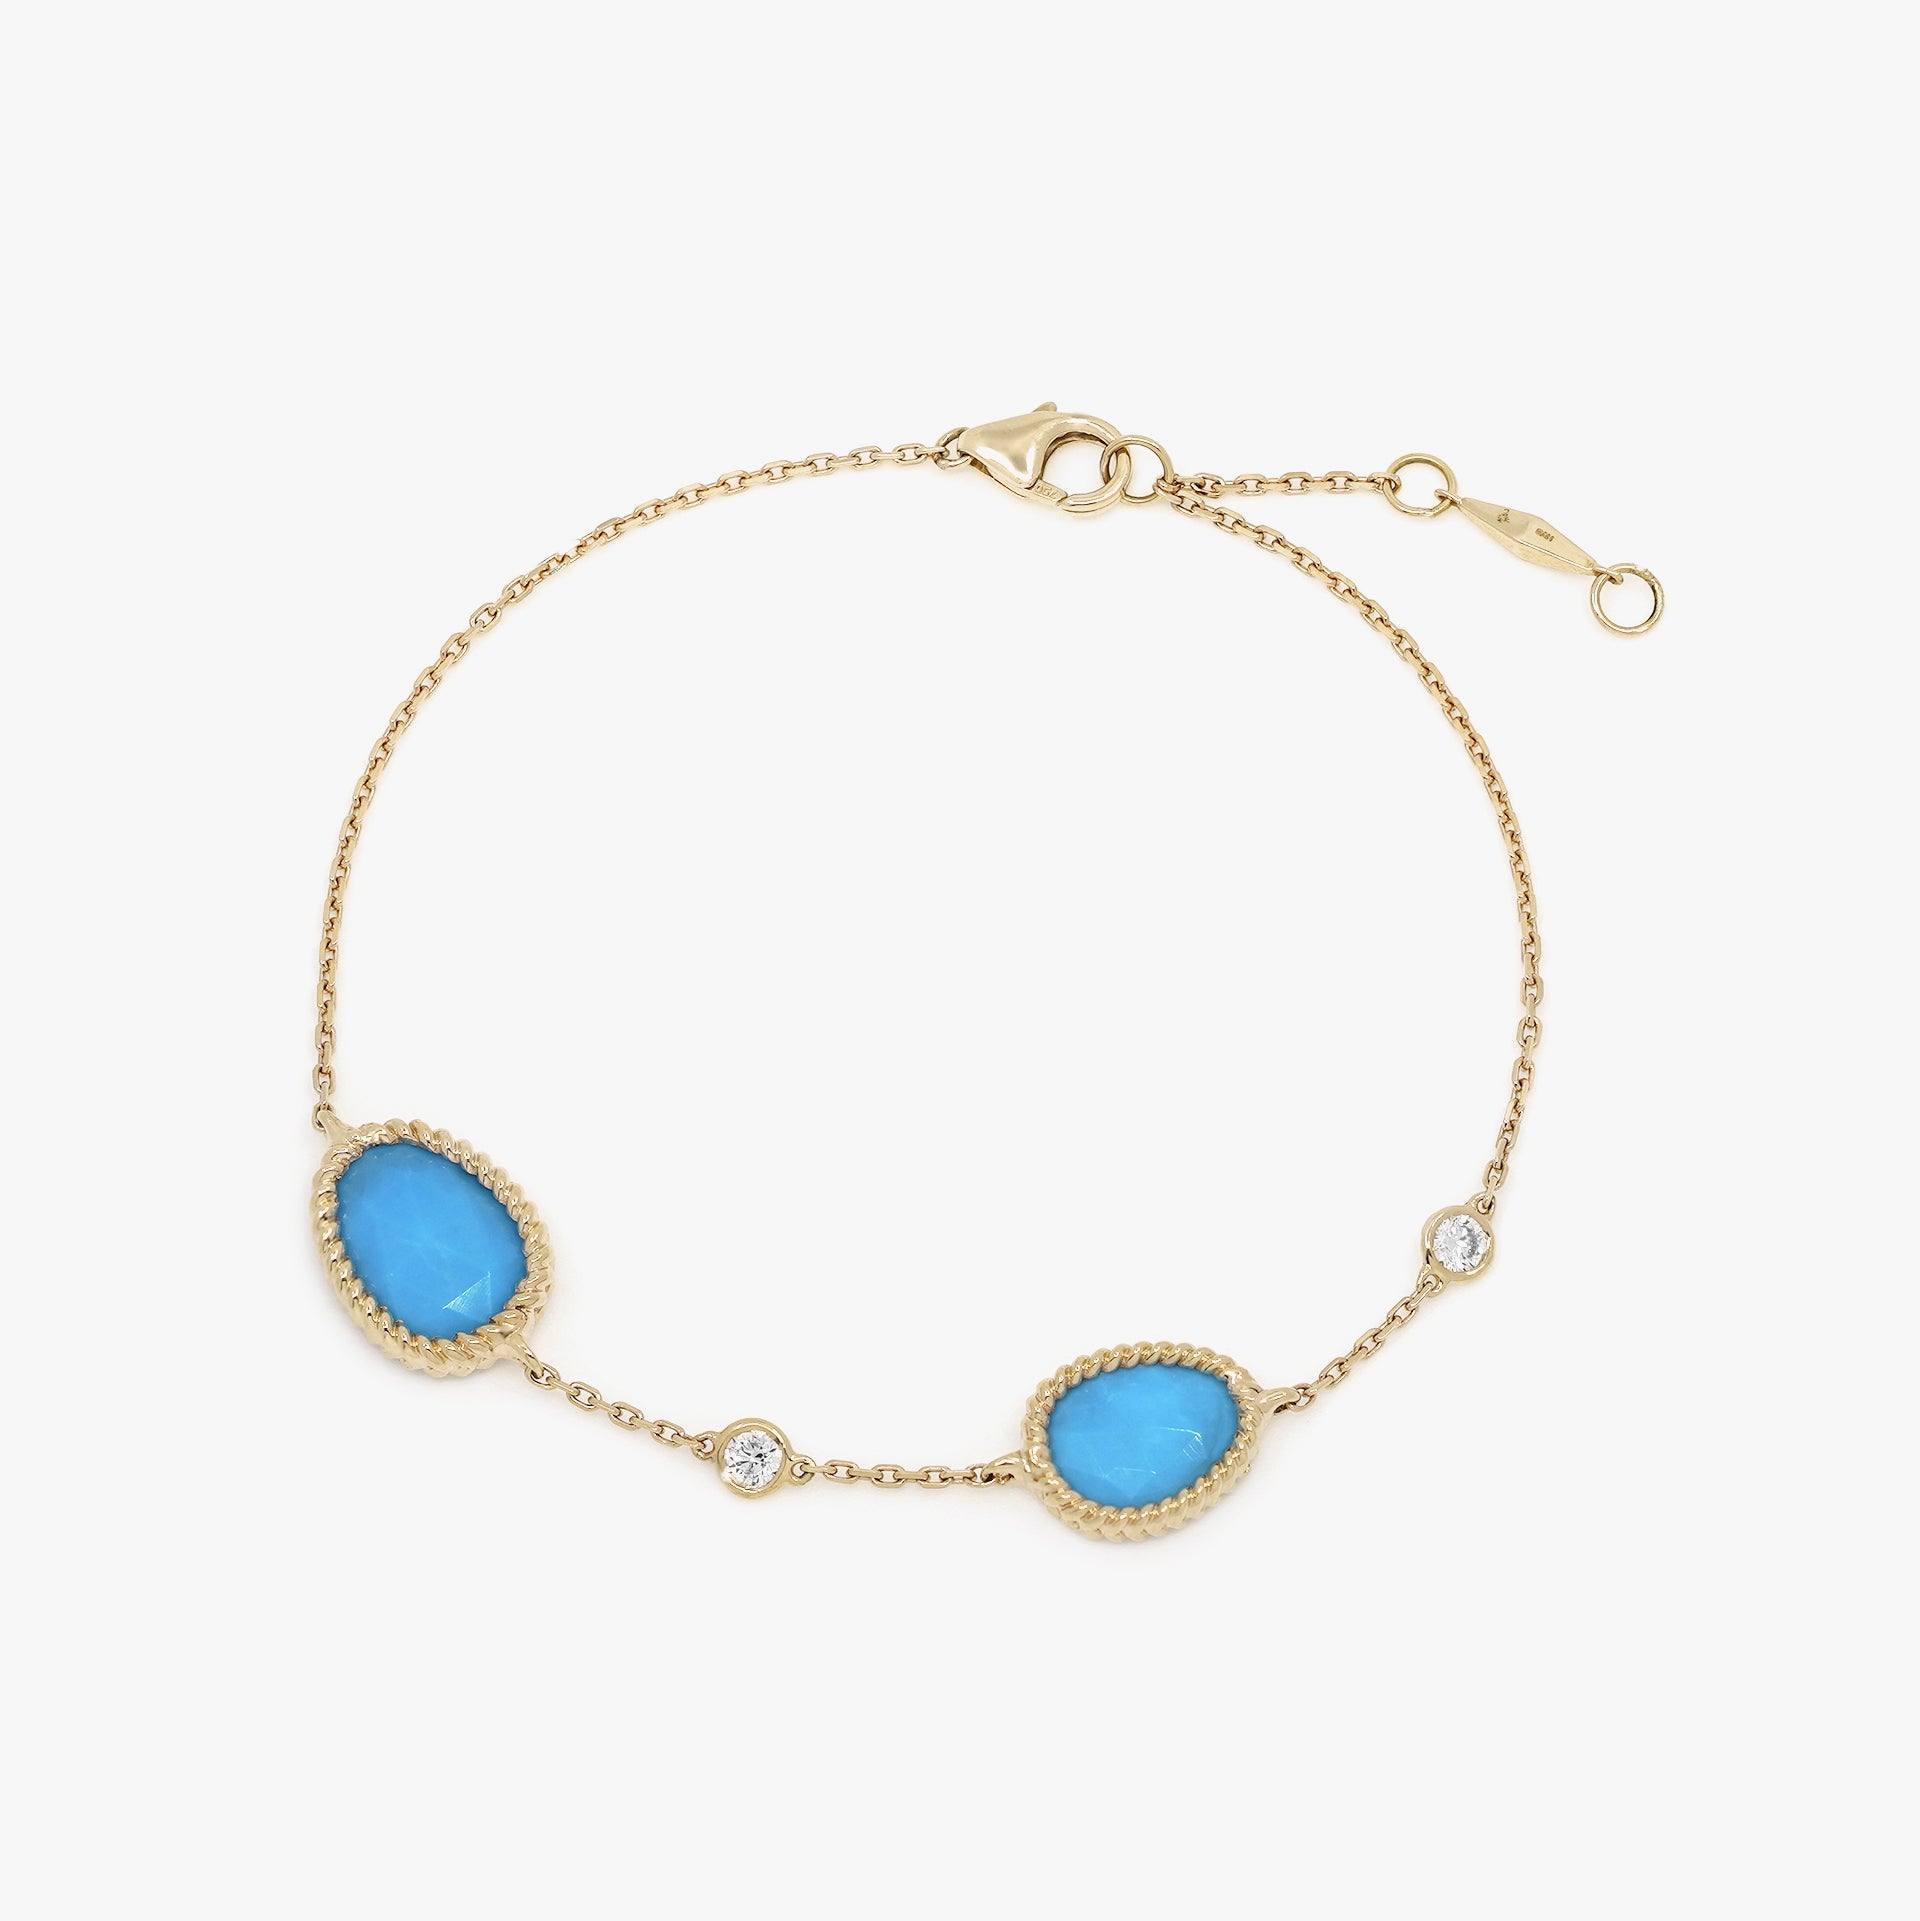 Nina Mariner Double Stone Bracelet In 18 Karat Yellow Gold With Natural White Diamonds And Turquoise Stones